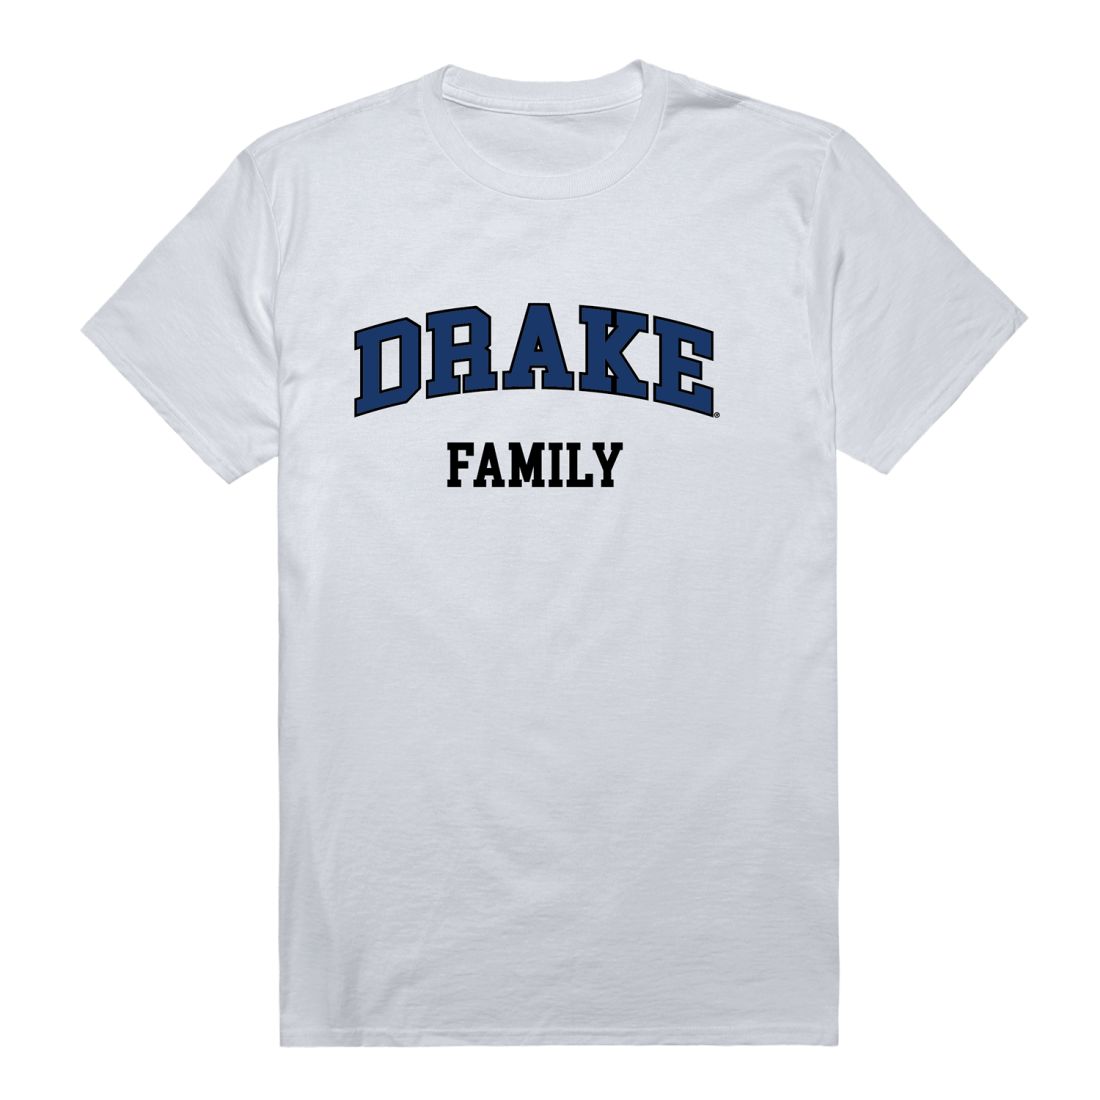 Drake University Bulldogs Family T-Shirt